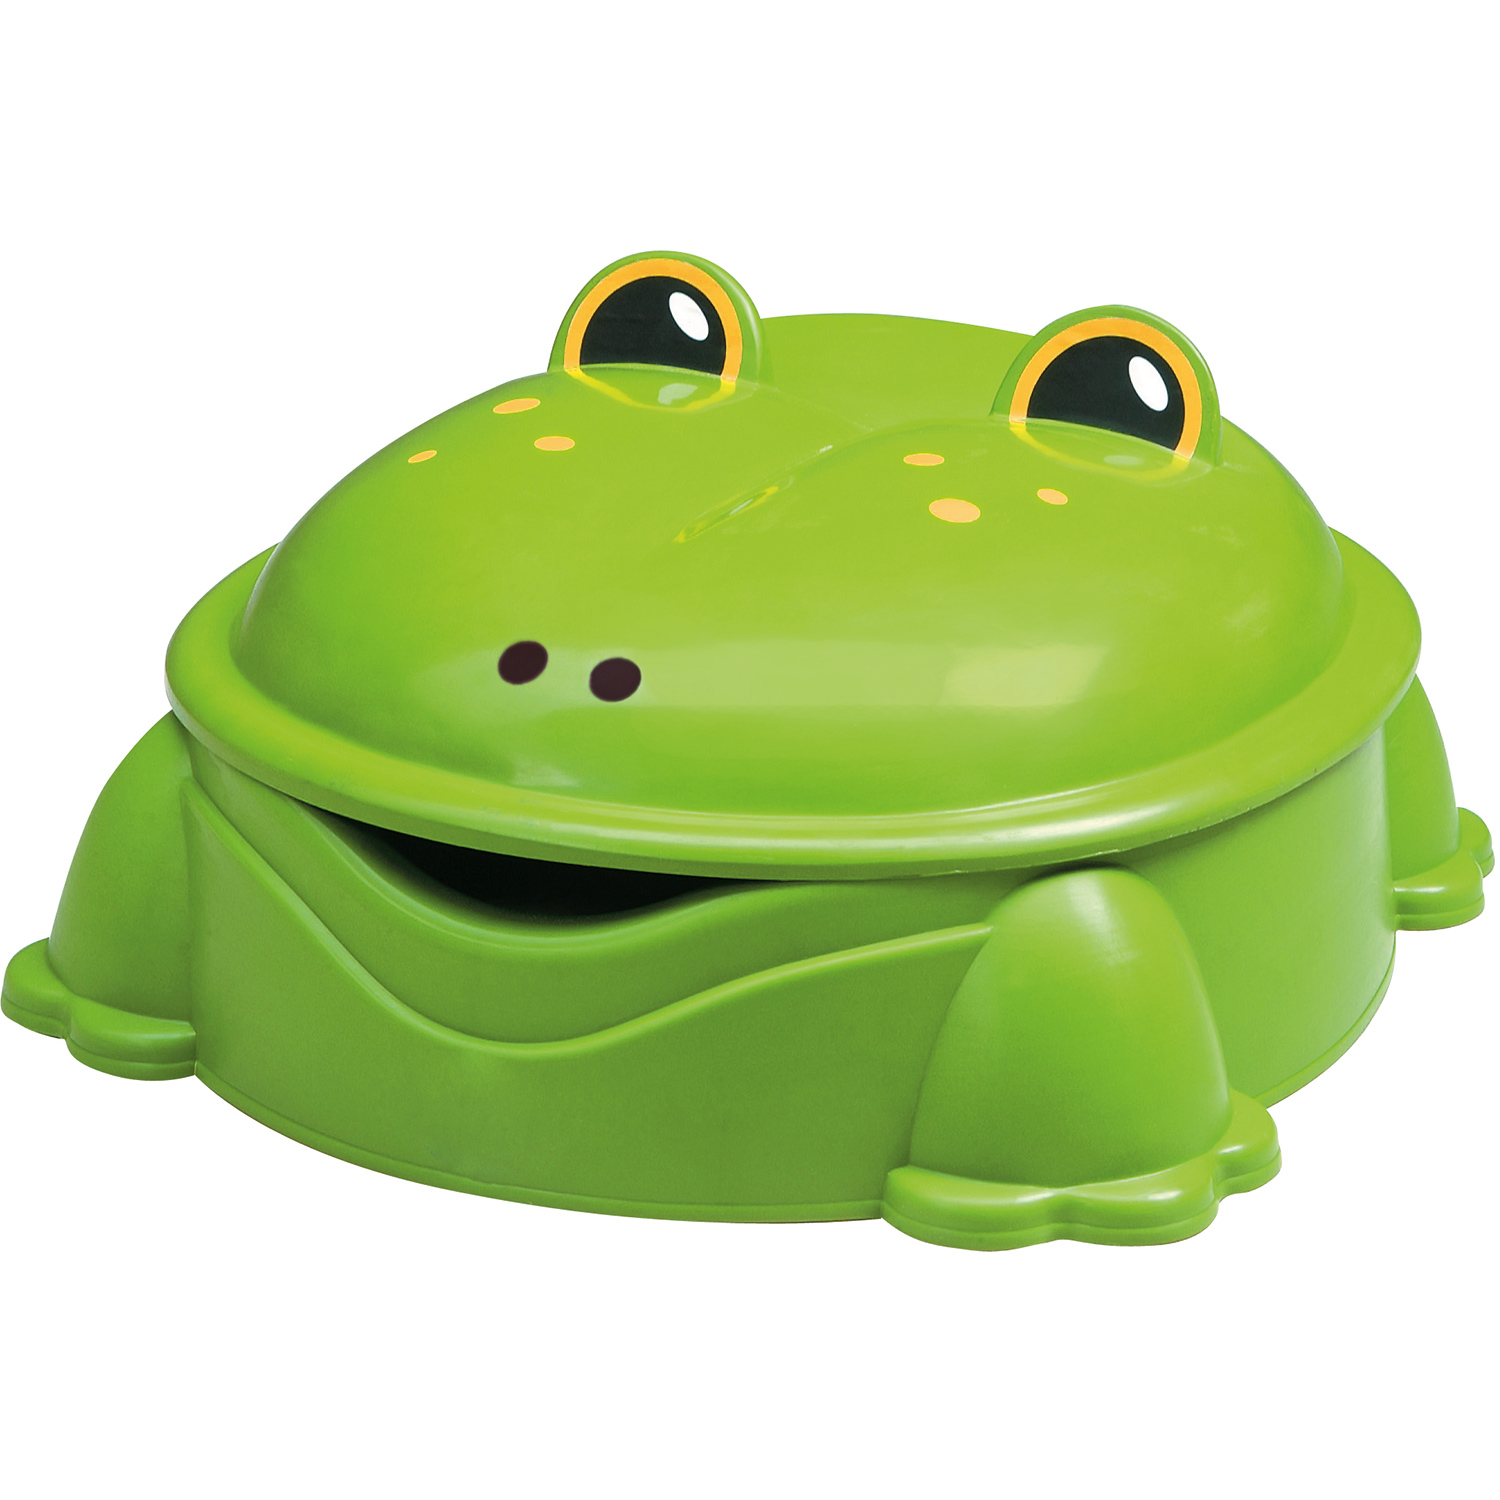 Paradiso Toys sandbox Freddy the Frog